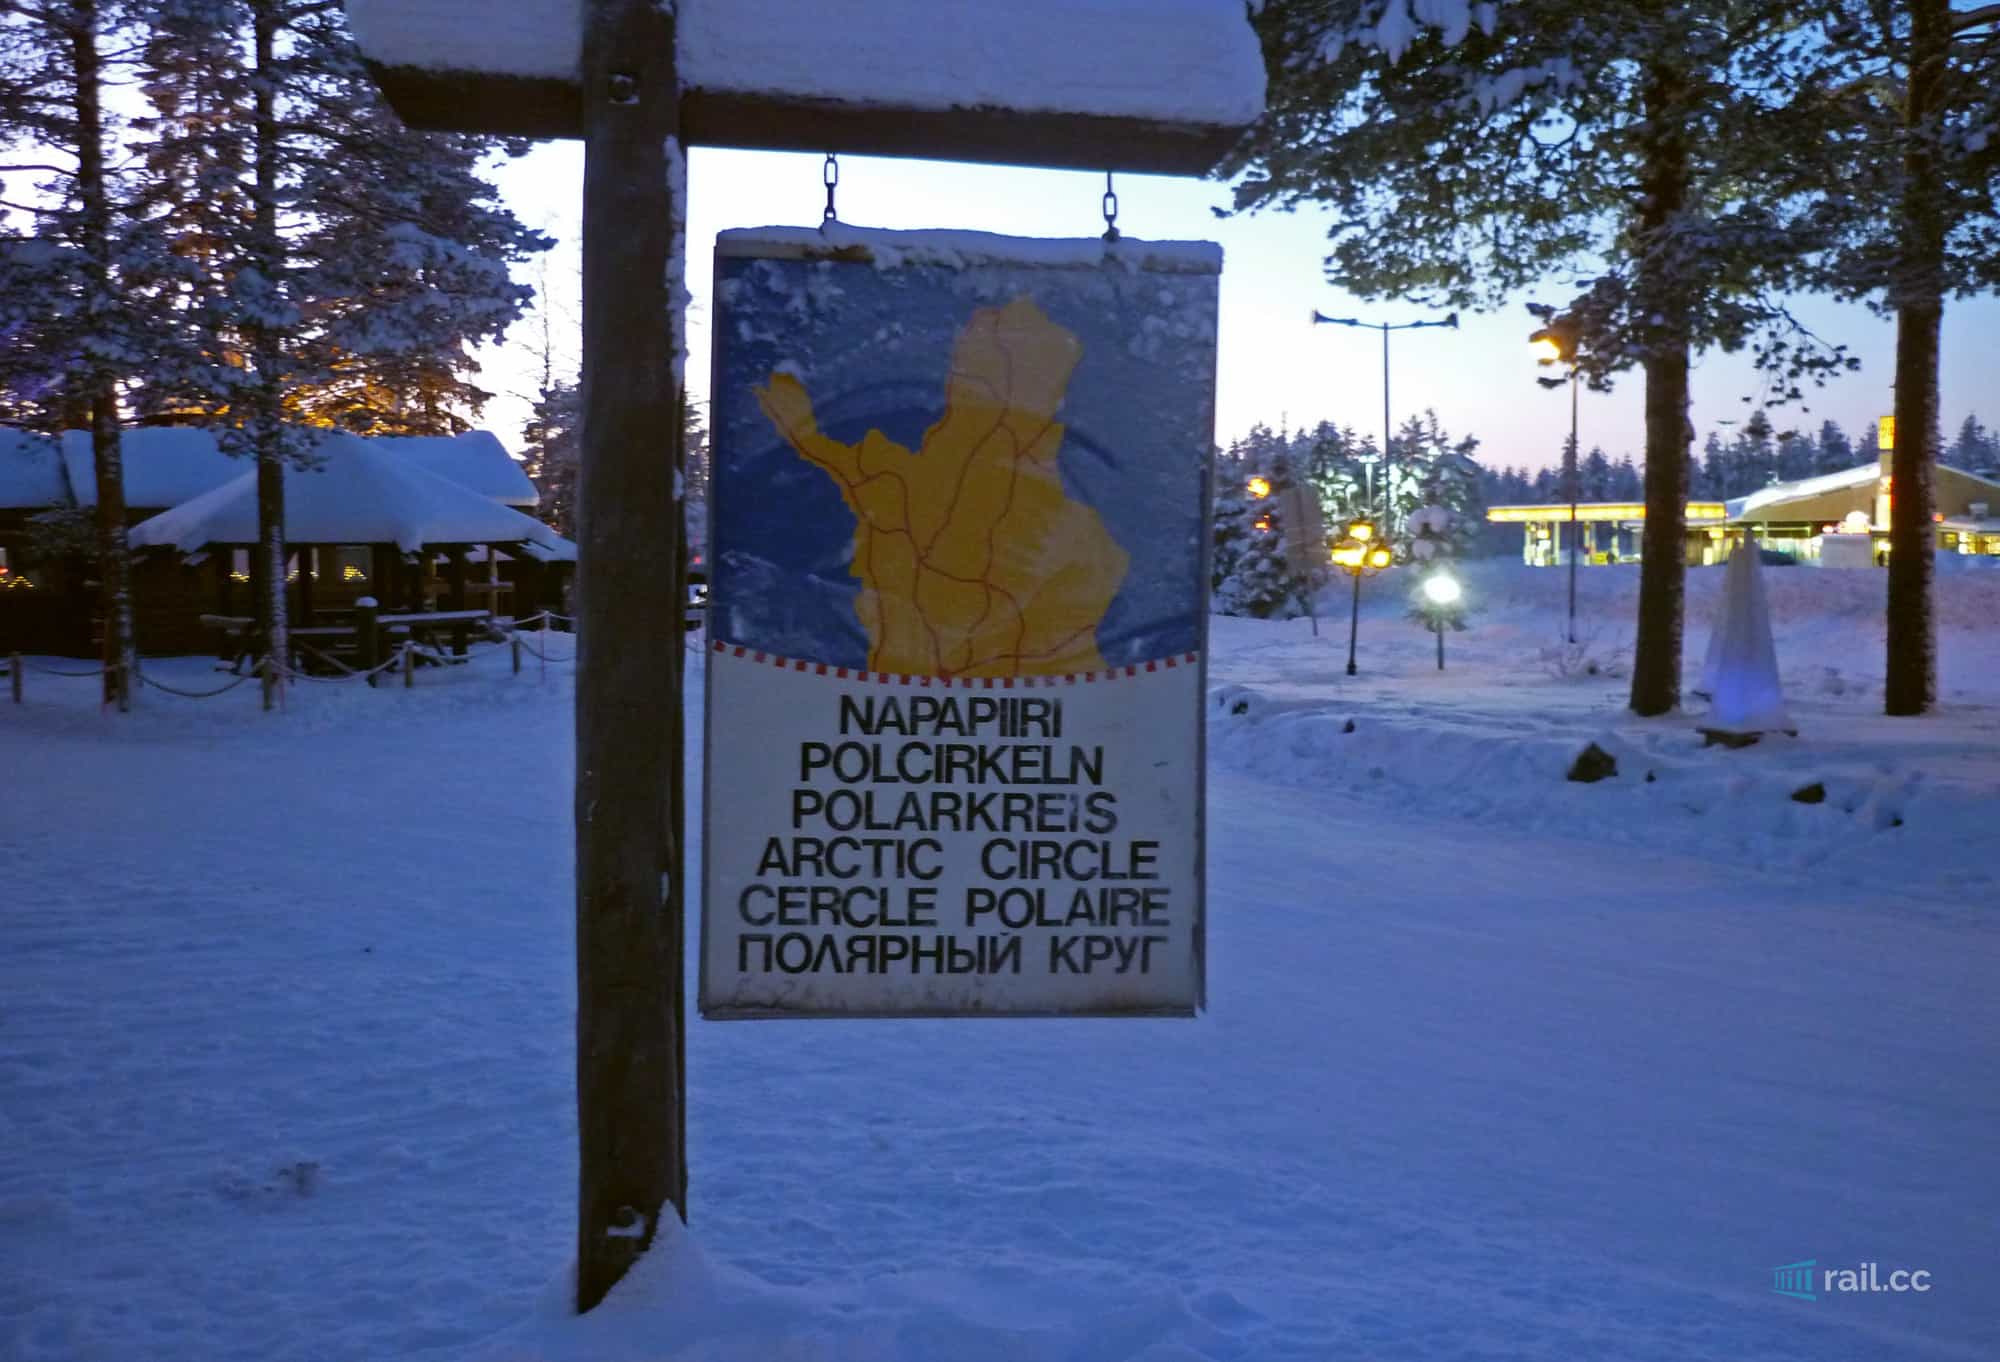 The Arctic Circle in Rovaniemi